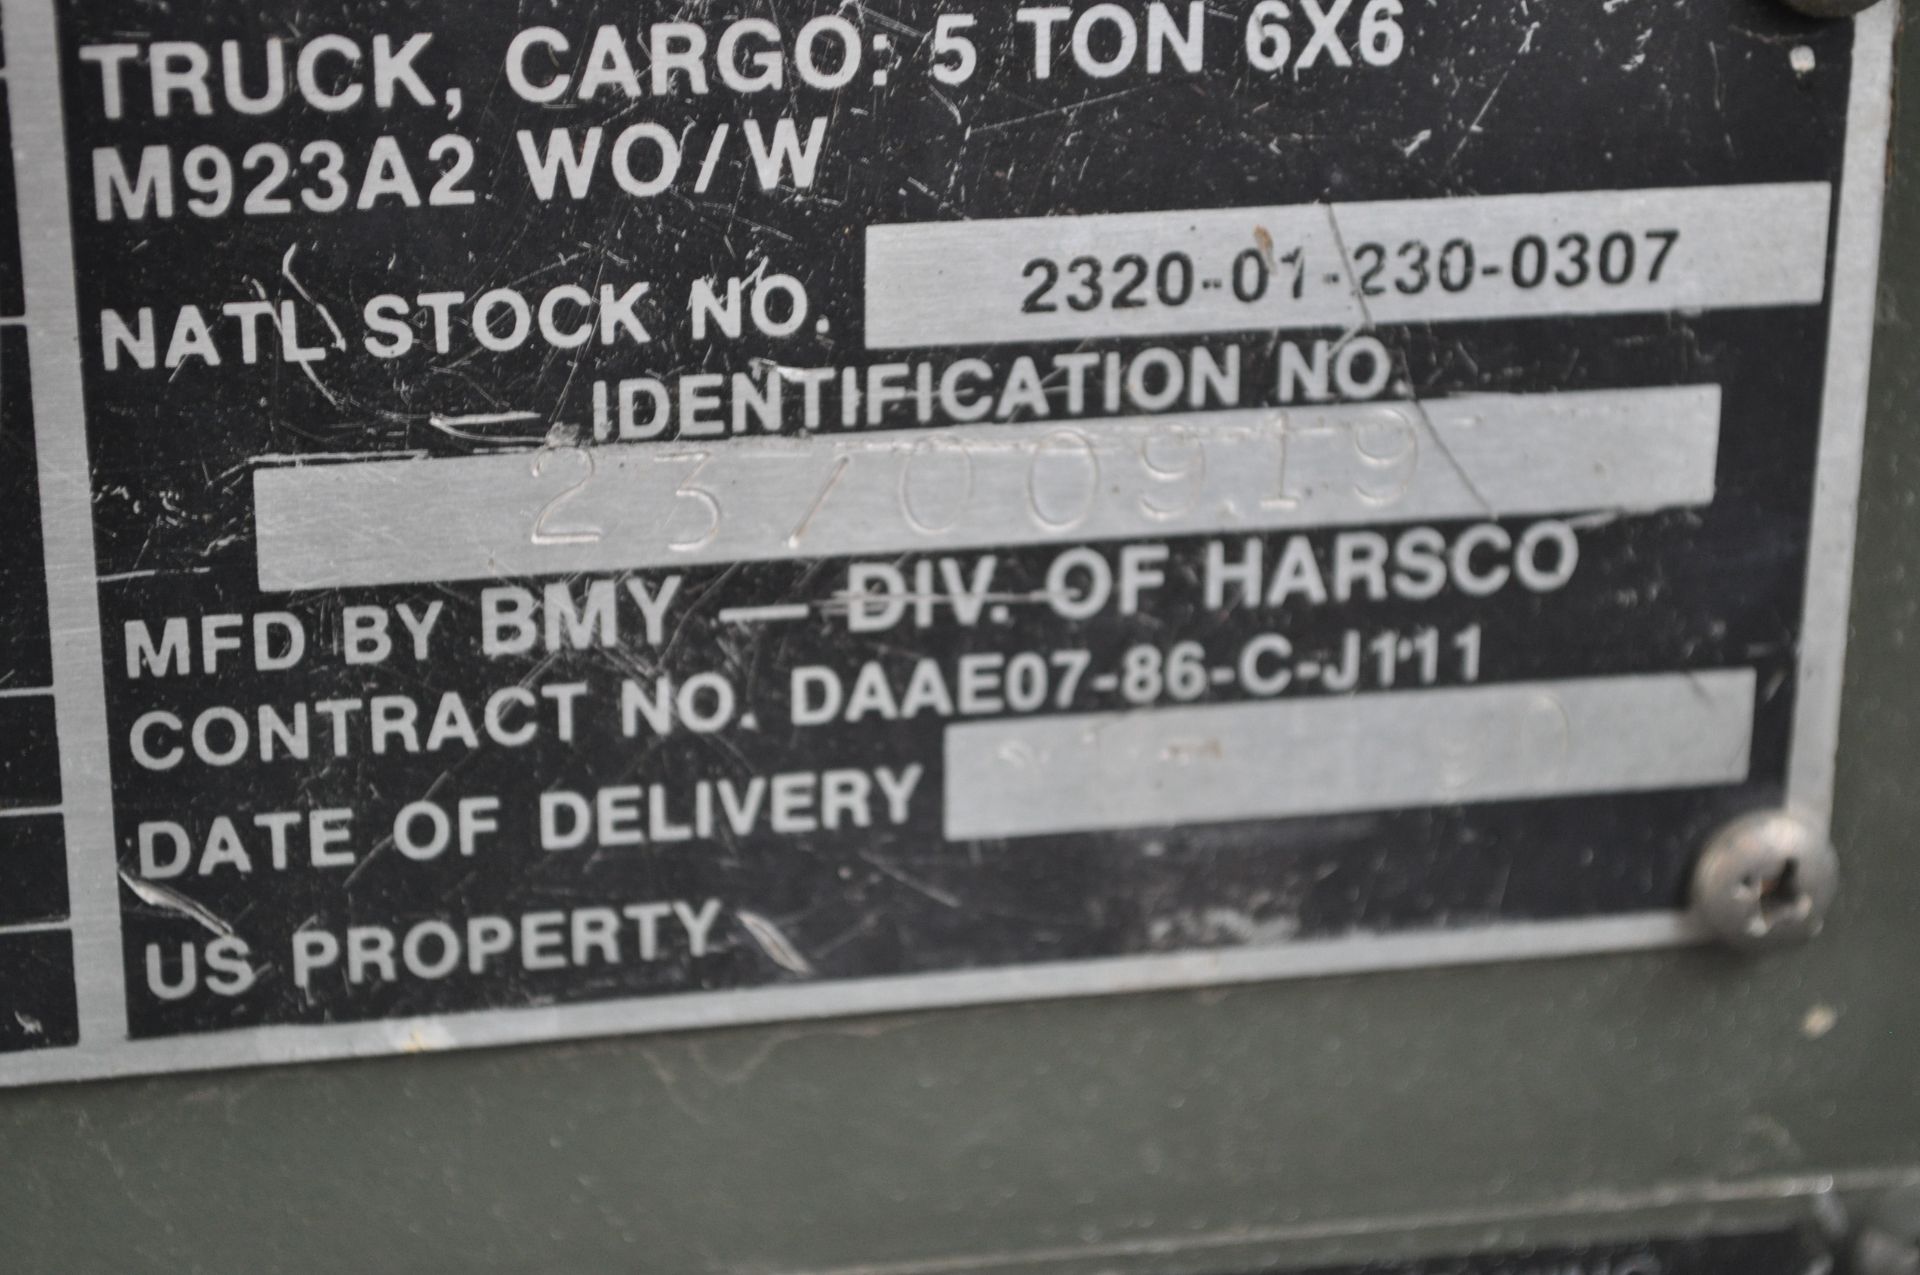 Harsco 5 Ton 6x6 military truck - Image 25 of 31